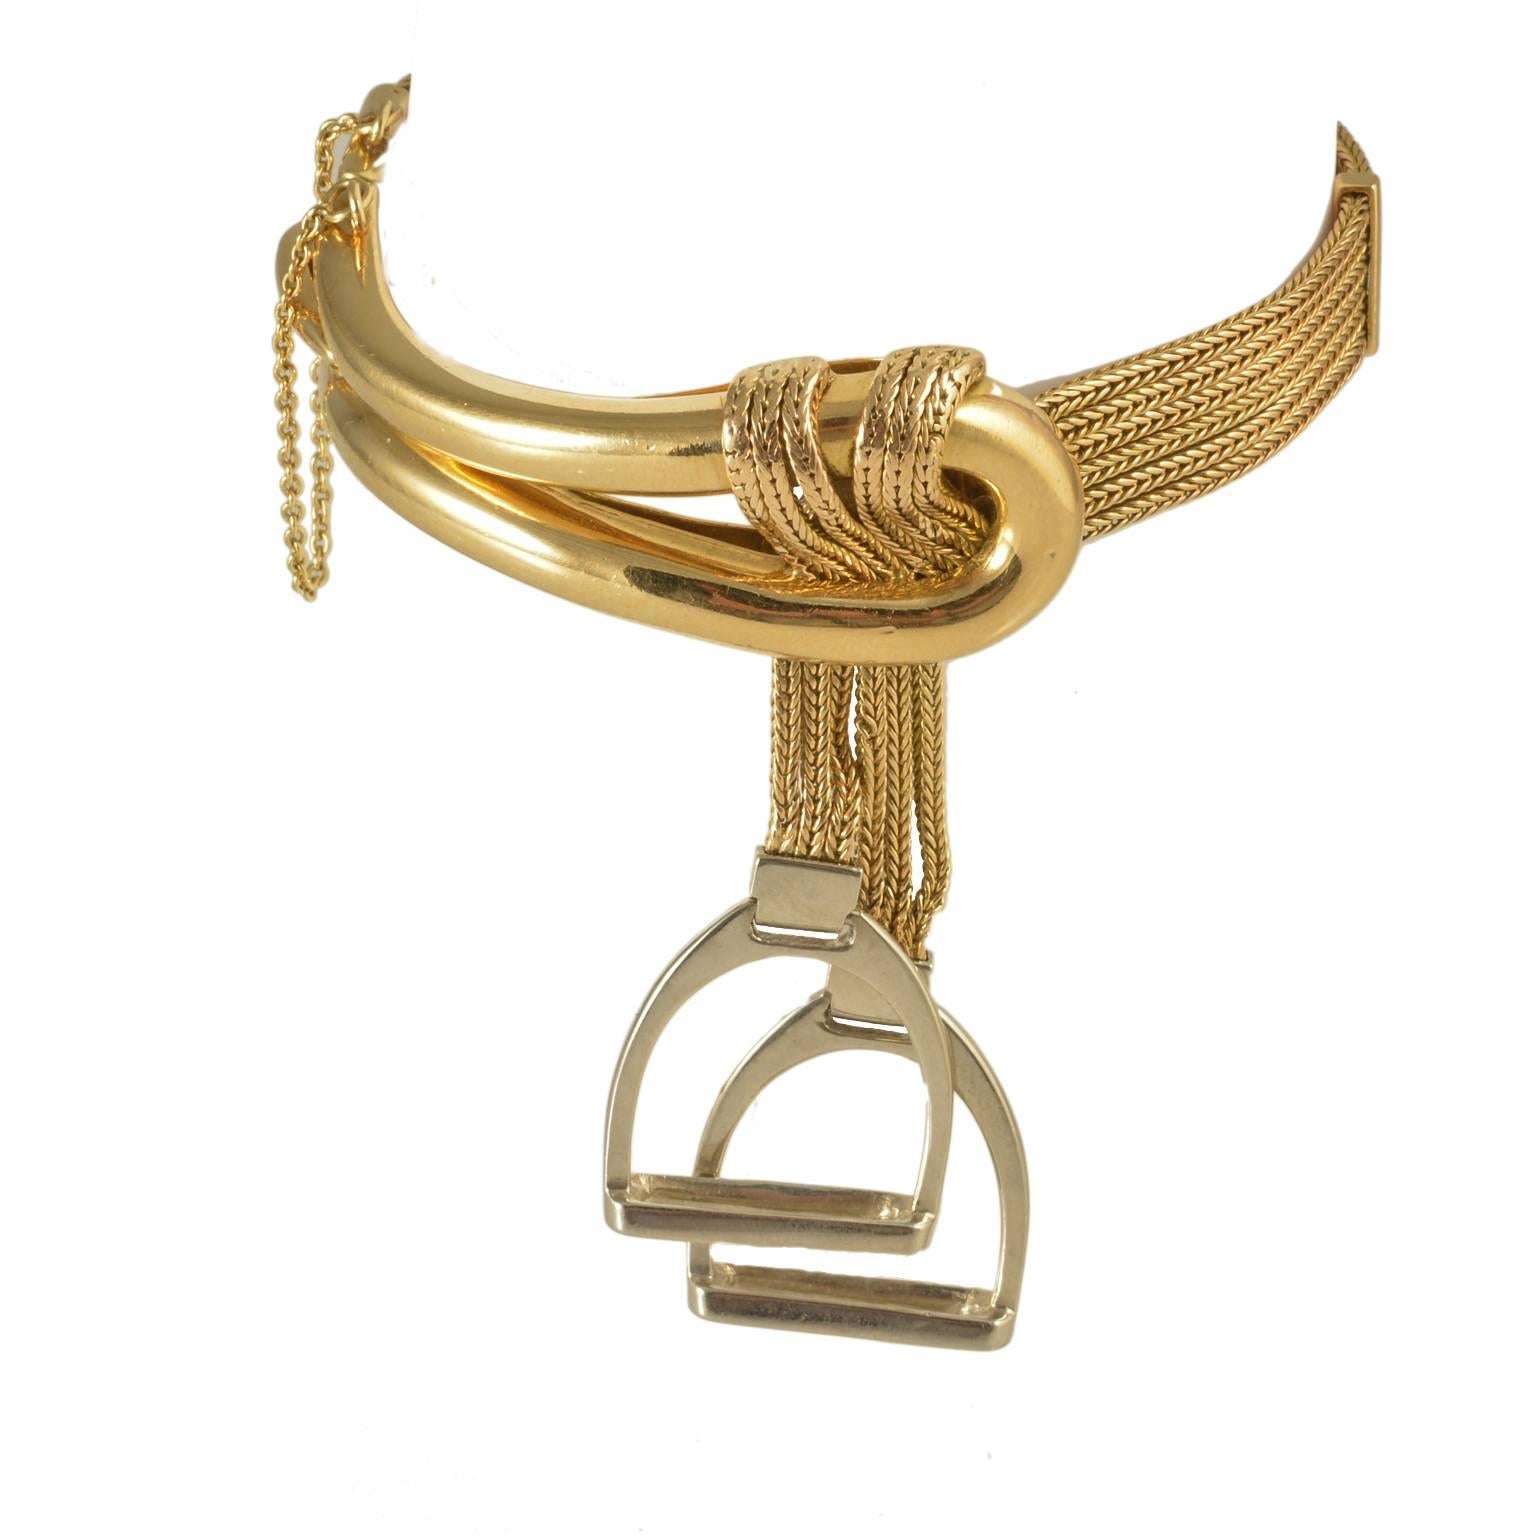 Hermes 18ct gold French stirup bracelet 1960c